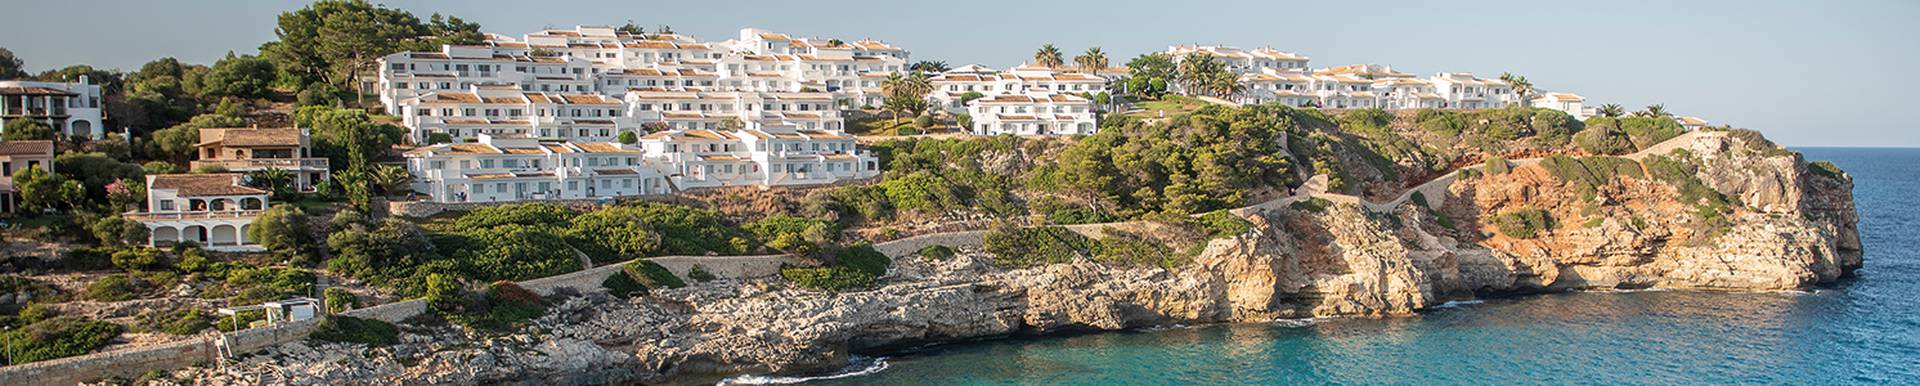 Blau Punta Reina Resort - Majorca - 